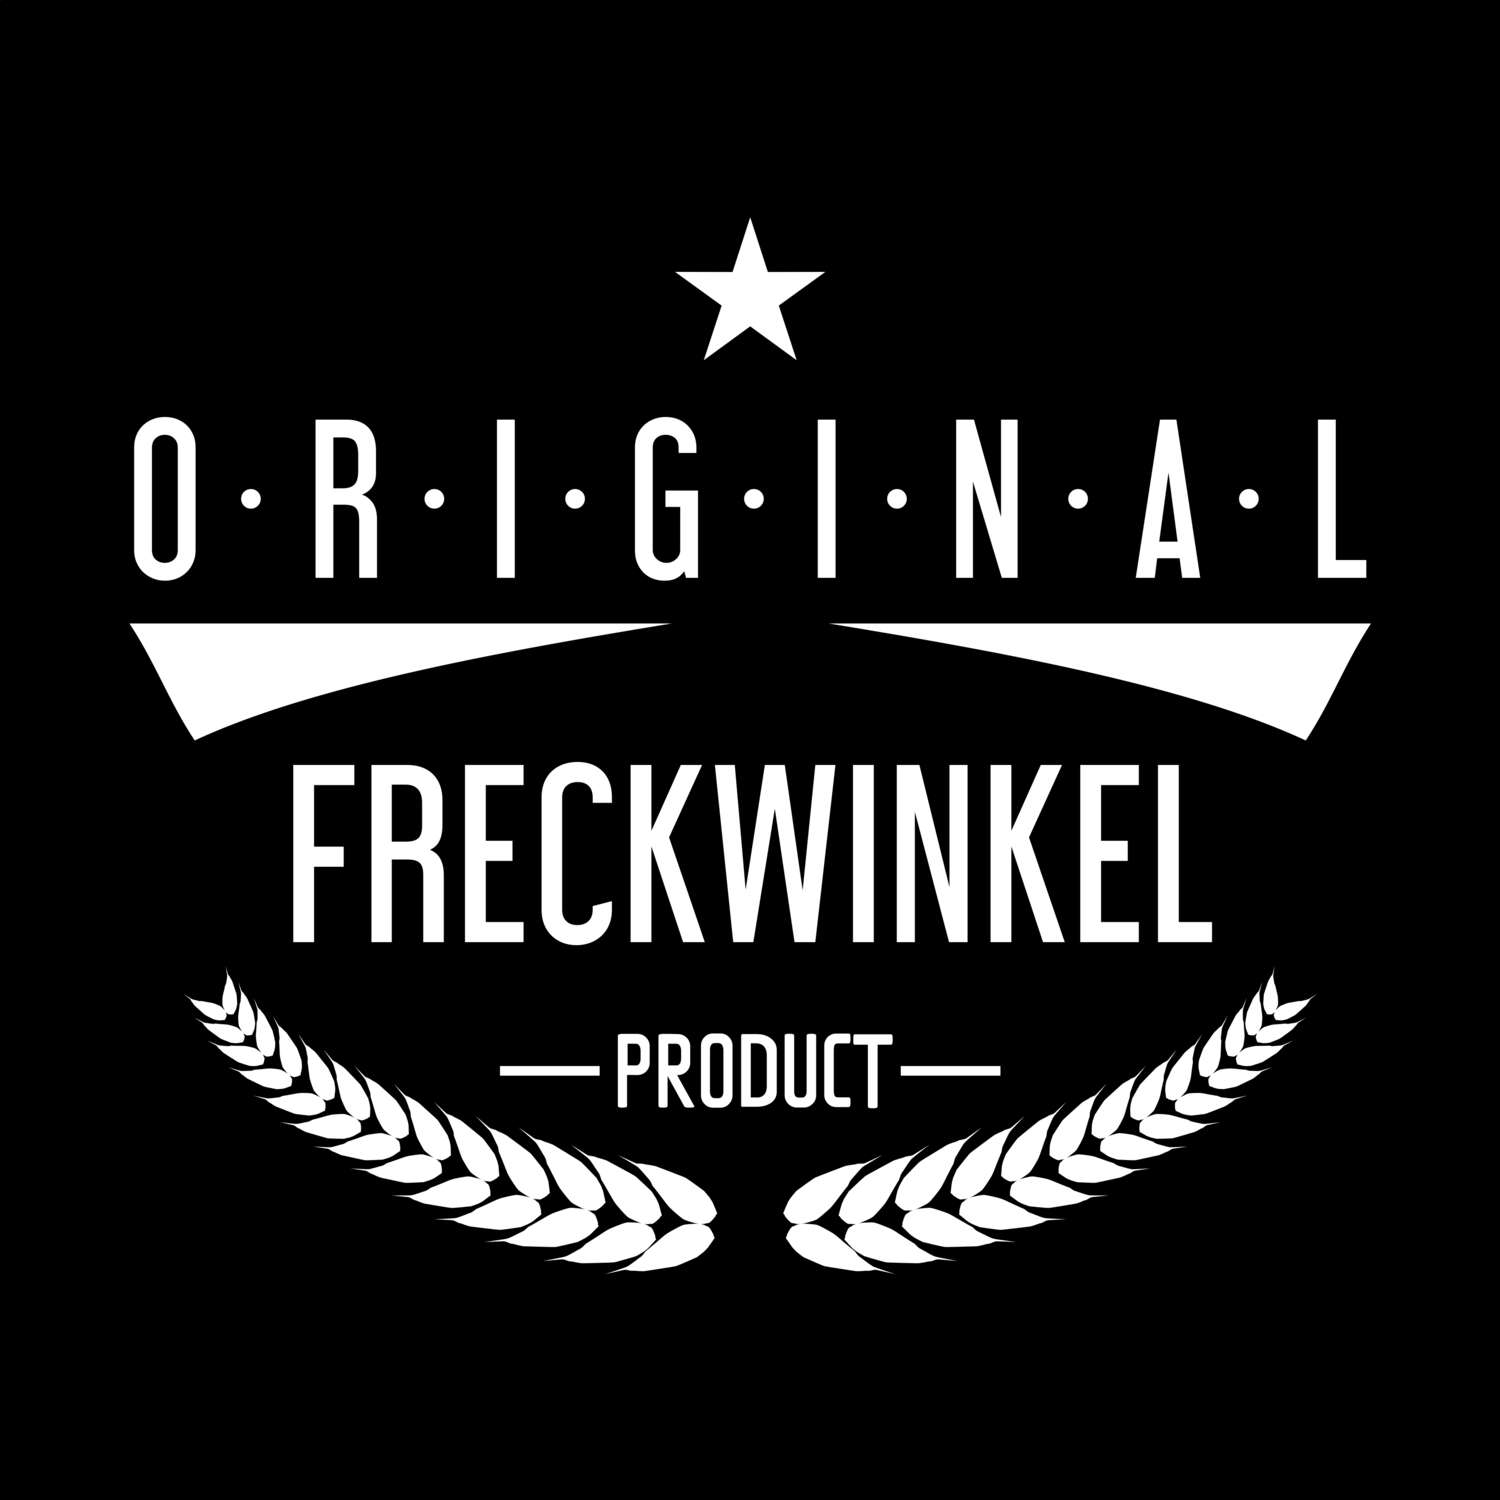 Freckwinkel T-Shirt »Original Product«